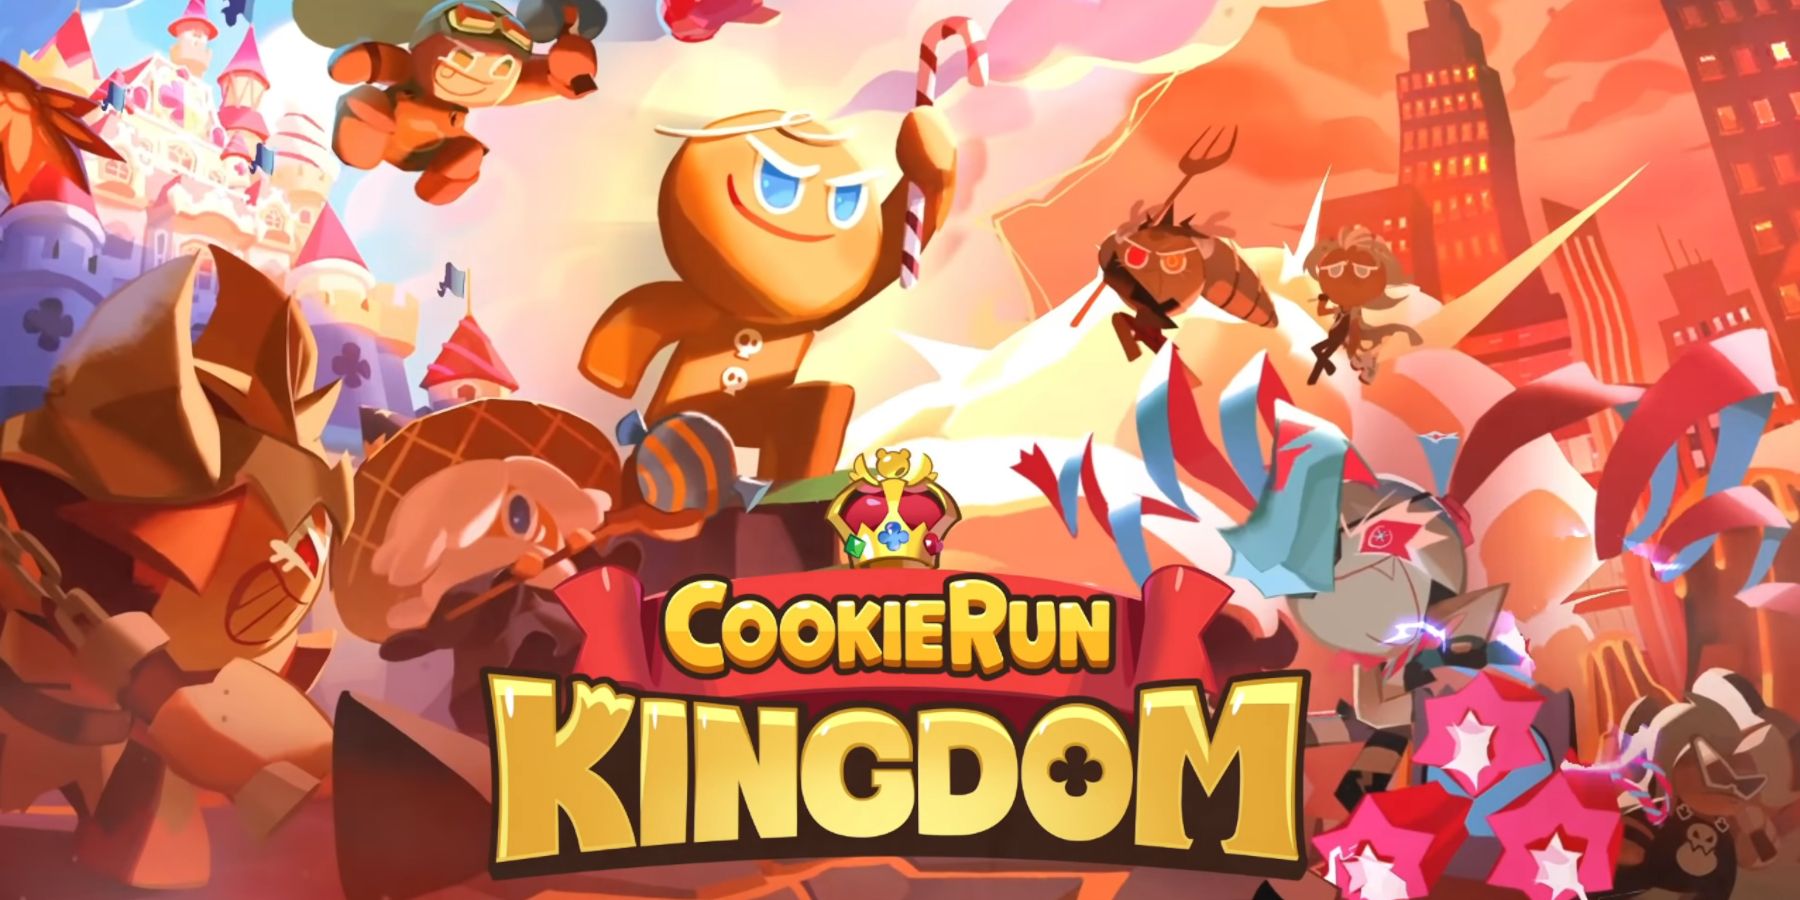 Cookie Run: Kingdom Update is Releasing October 8